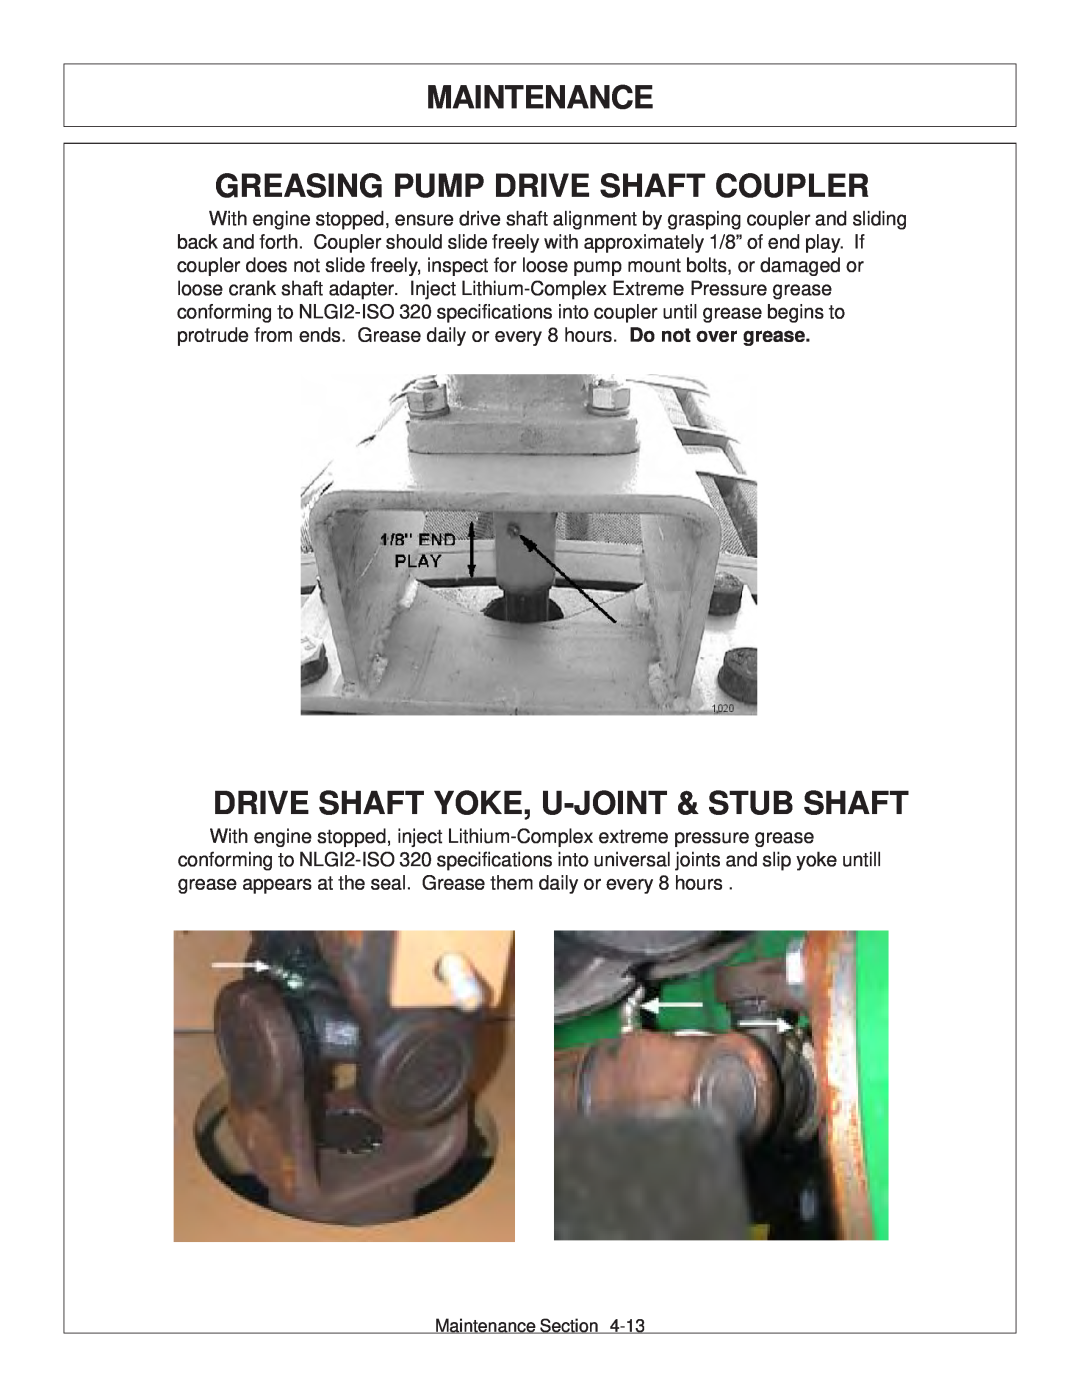 Tiger JD 62-6420 manual Maintenance Greasing Pump Drive Shaft Coupler, Drive Shaft Yoke, U-Joint & Stub Shaft 